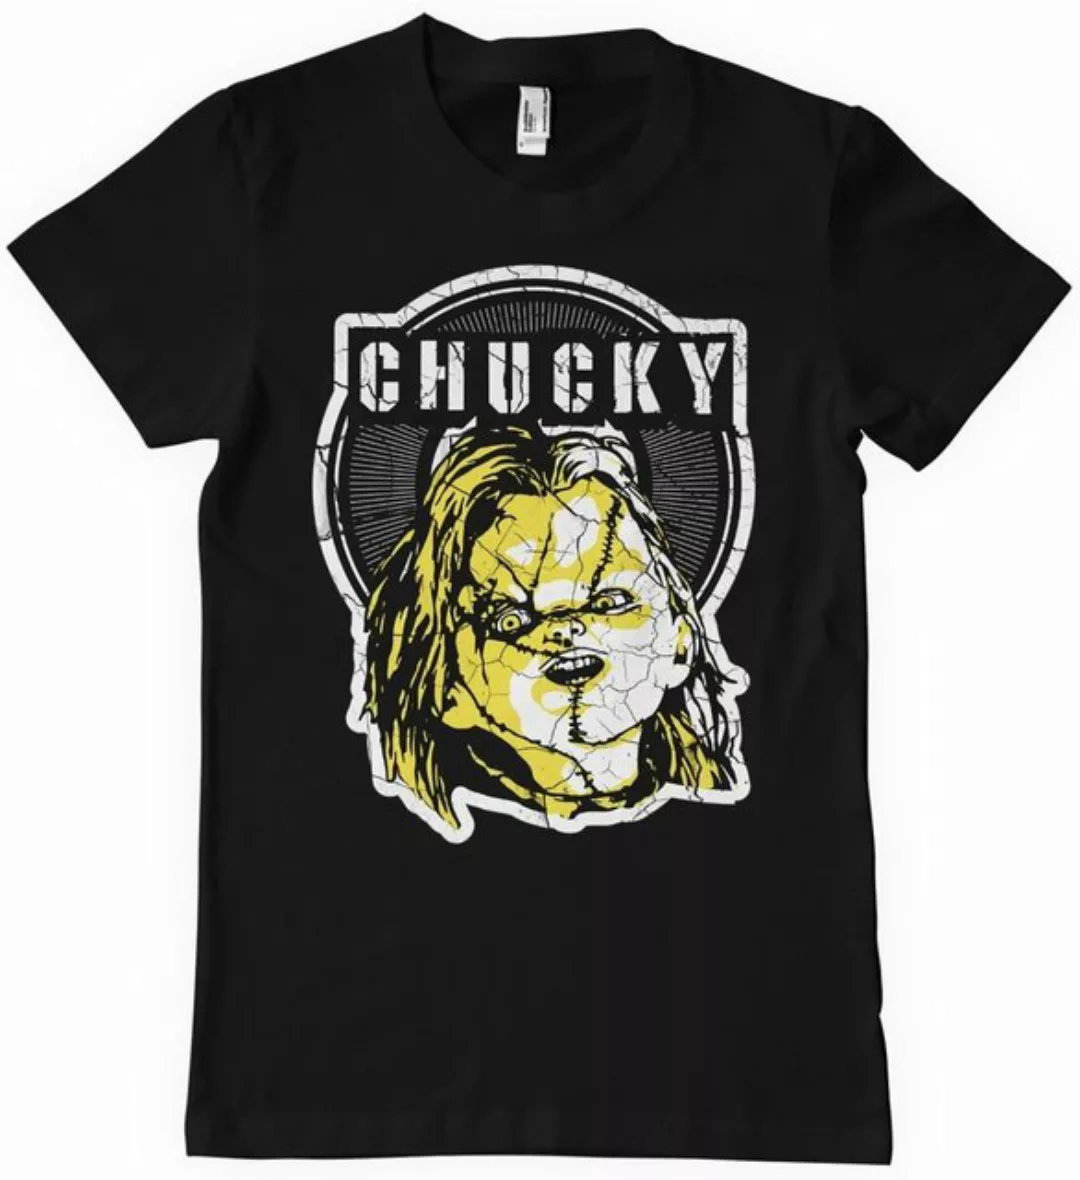 Chucky T-Shirt günstig online kaufen